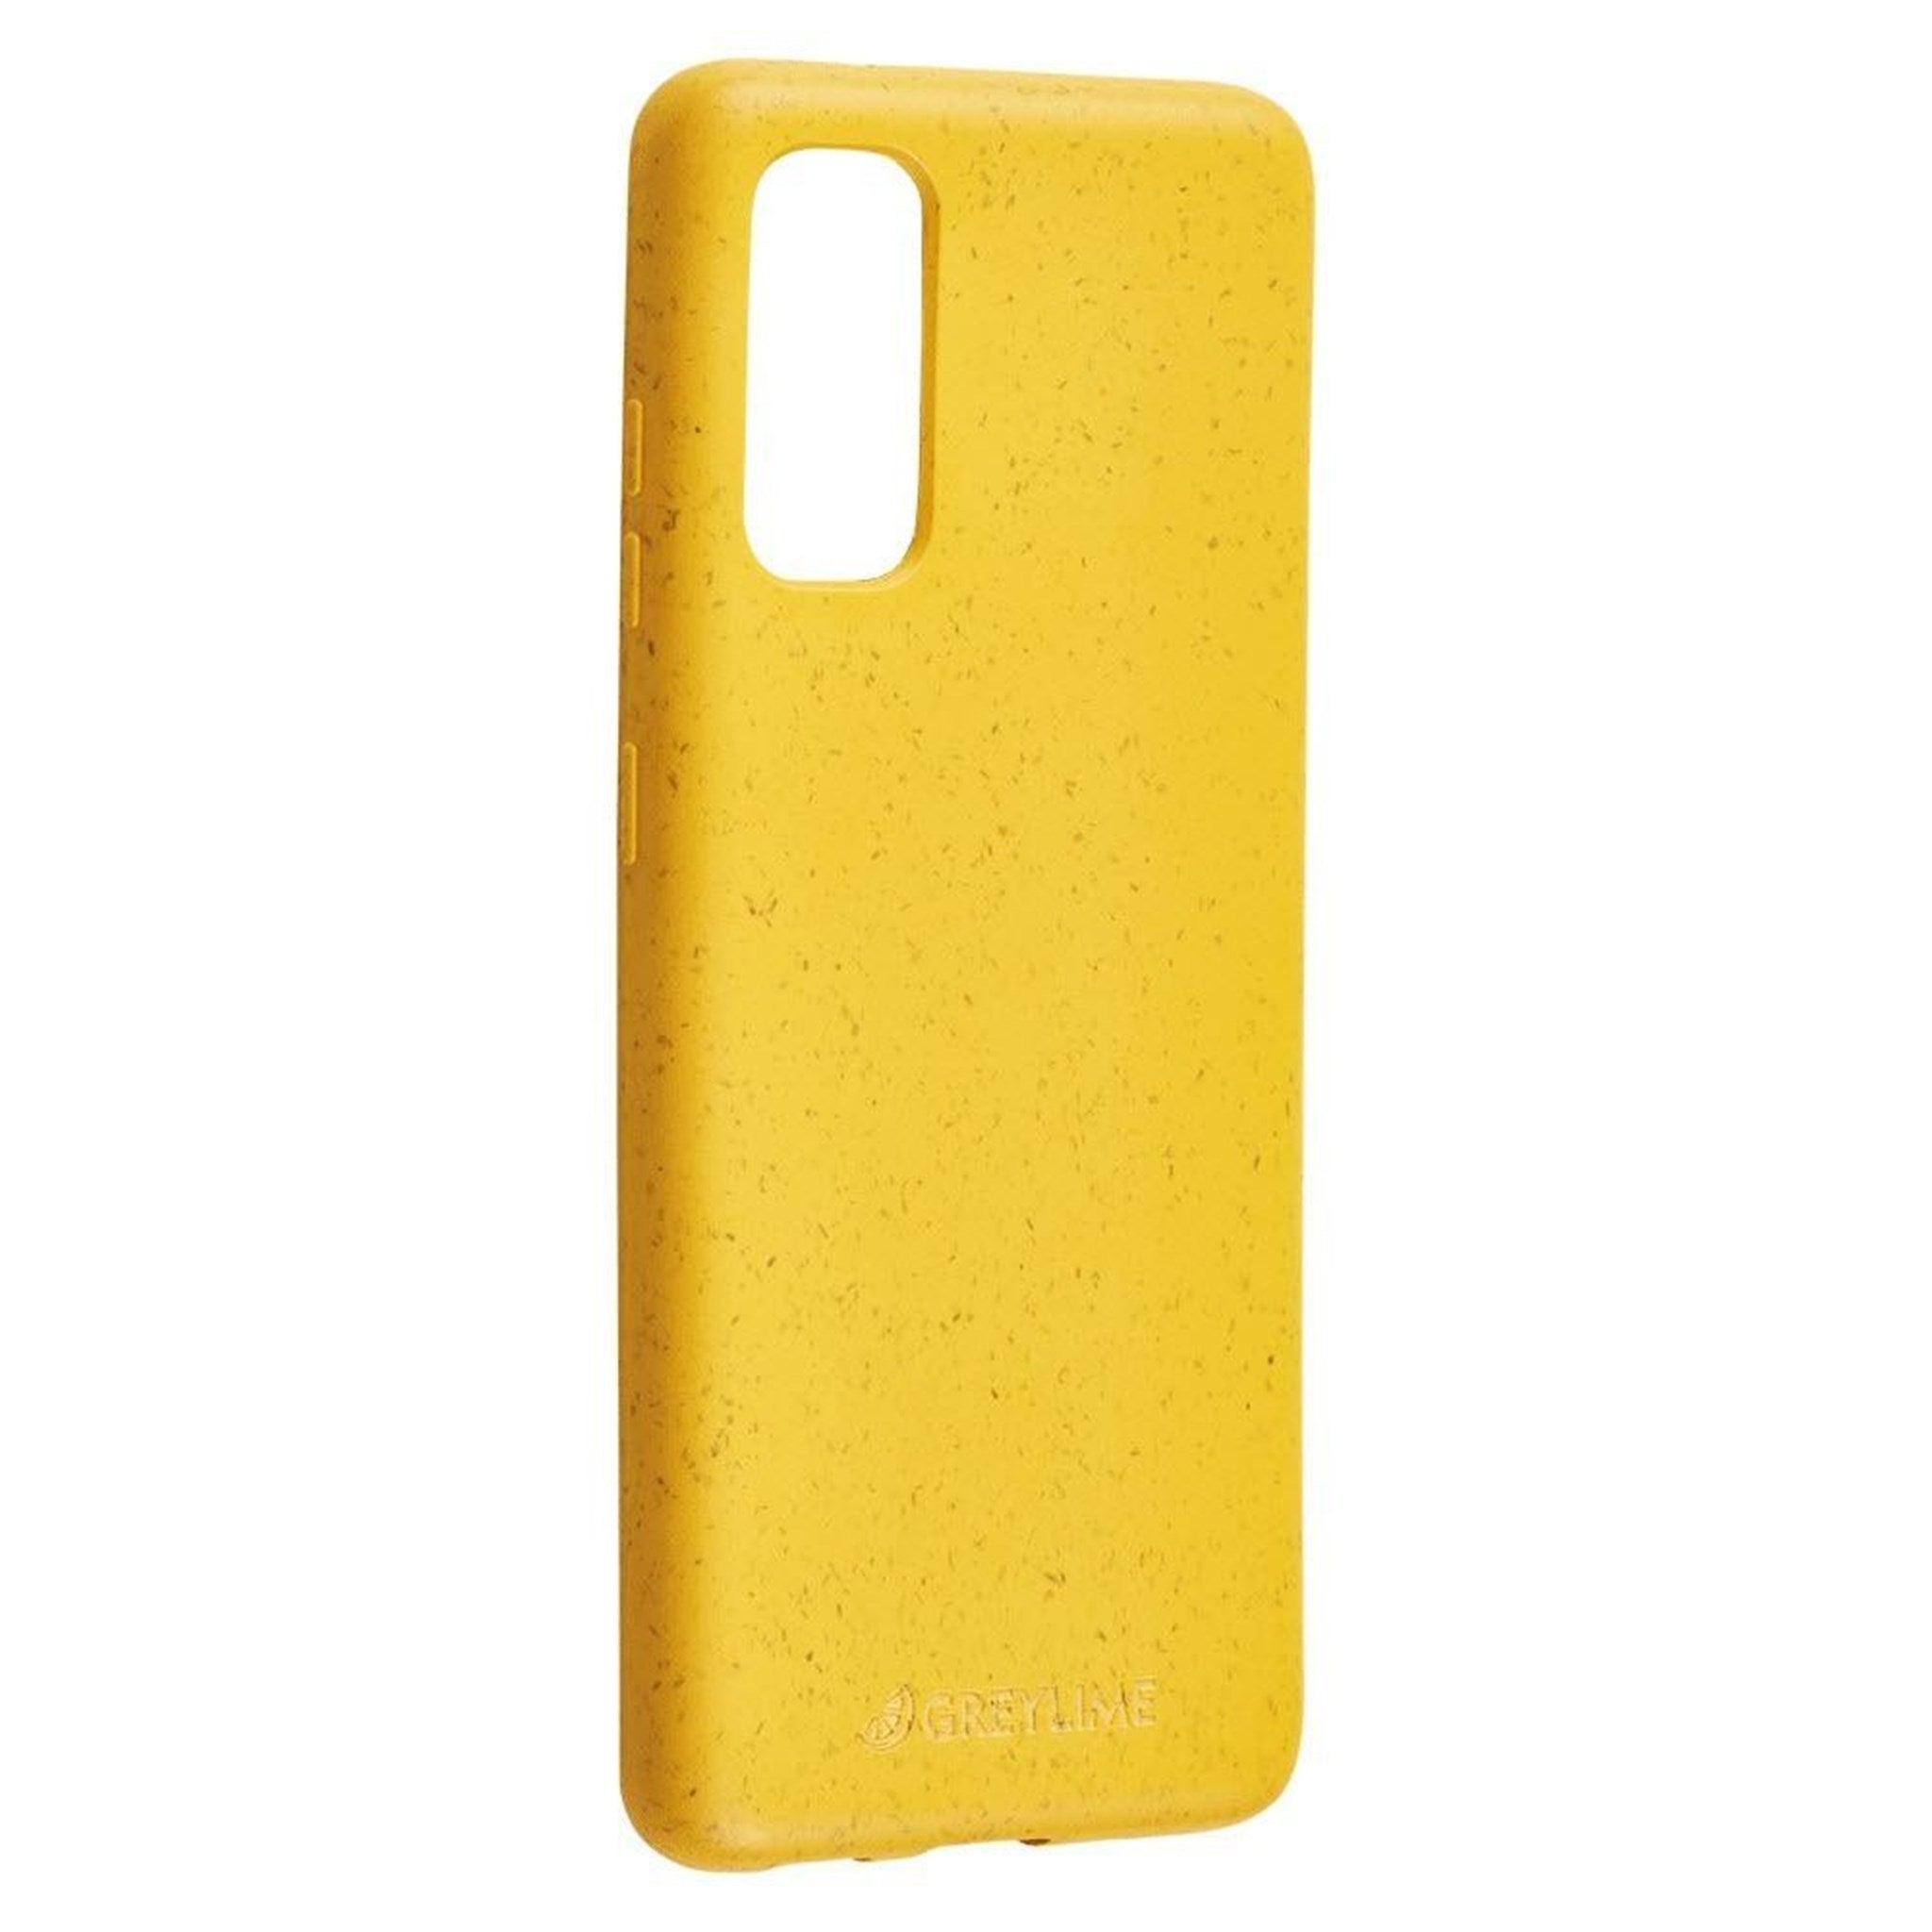 GreyLime-Samsung-Galaxy-S20-Biodegradable-Cover-Yellow-COSAM2006-V1.jpg